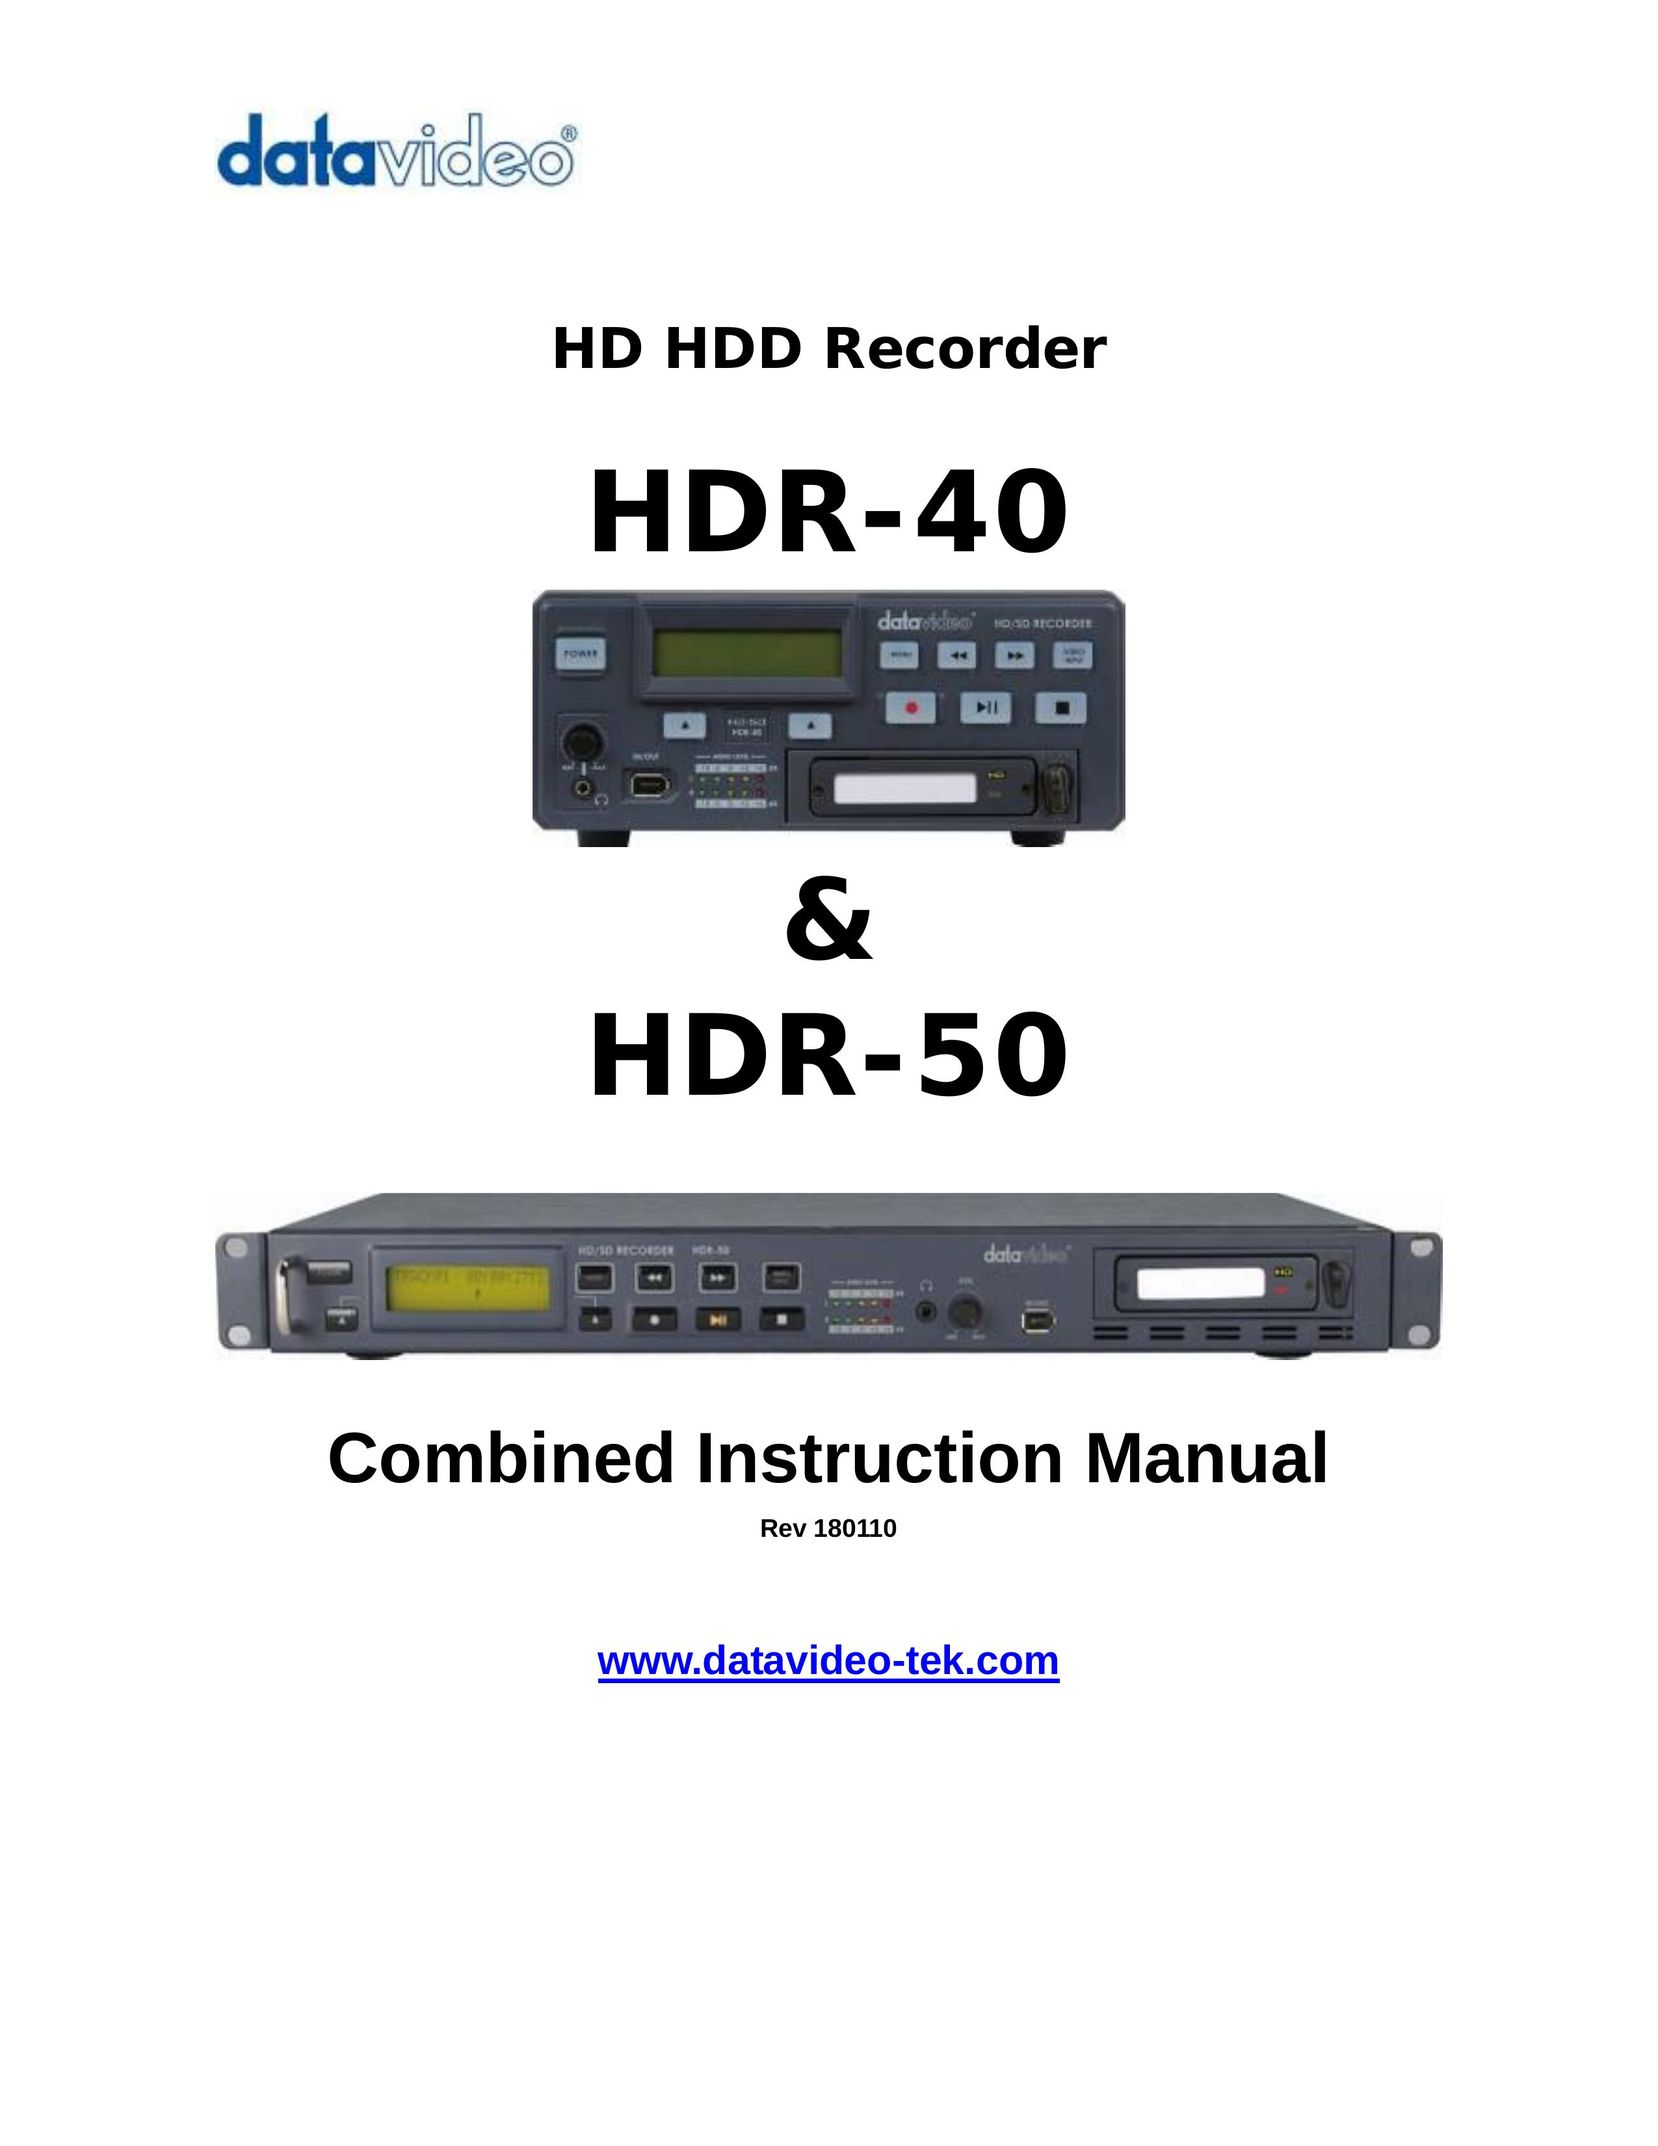 Datavideo HDR60 DVD Recorder User Manual